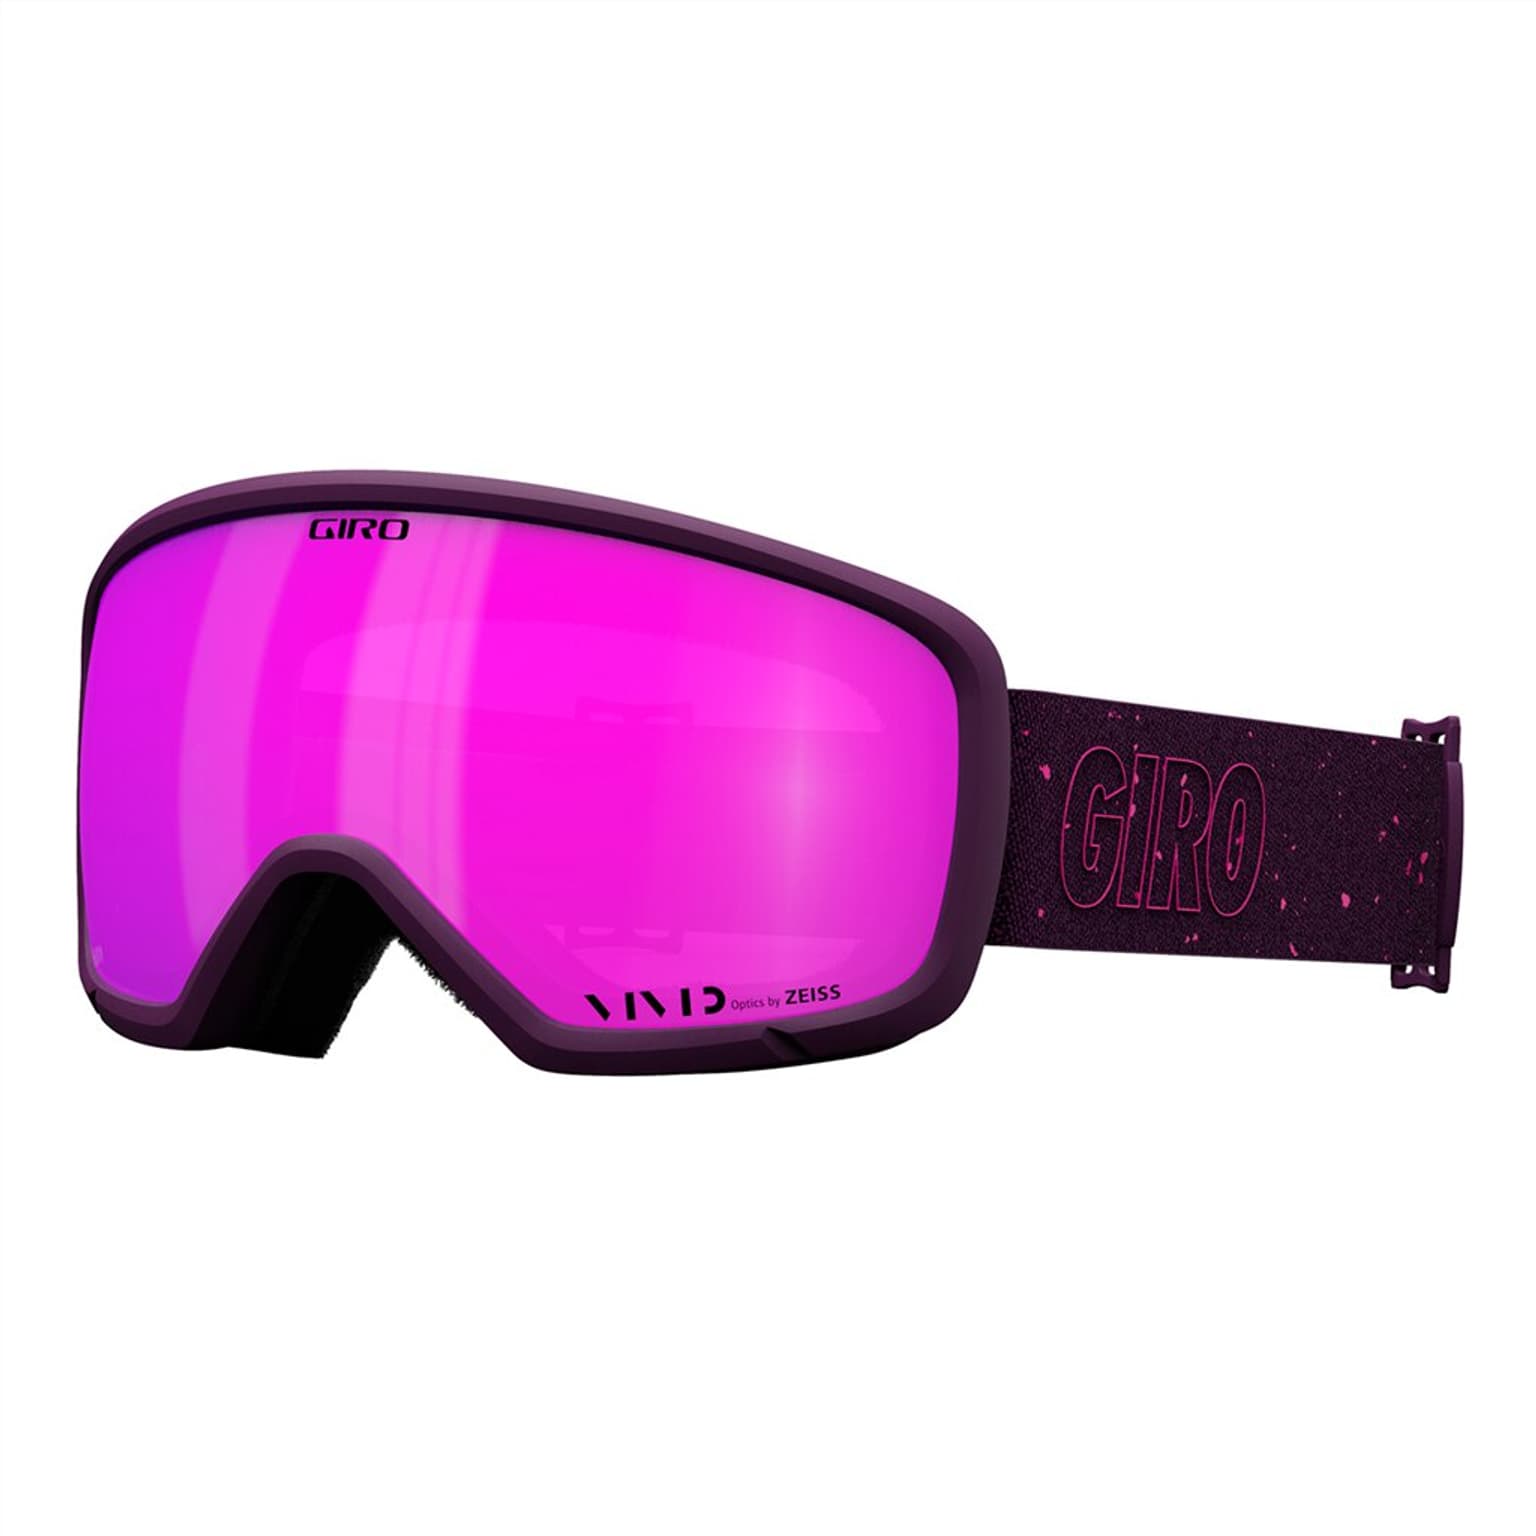 Giro Giro Millie VIVID Masque de ski violet 1